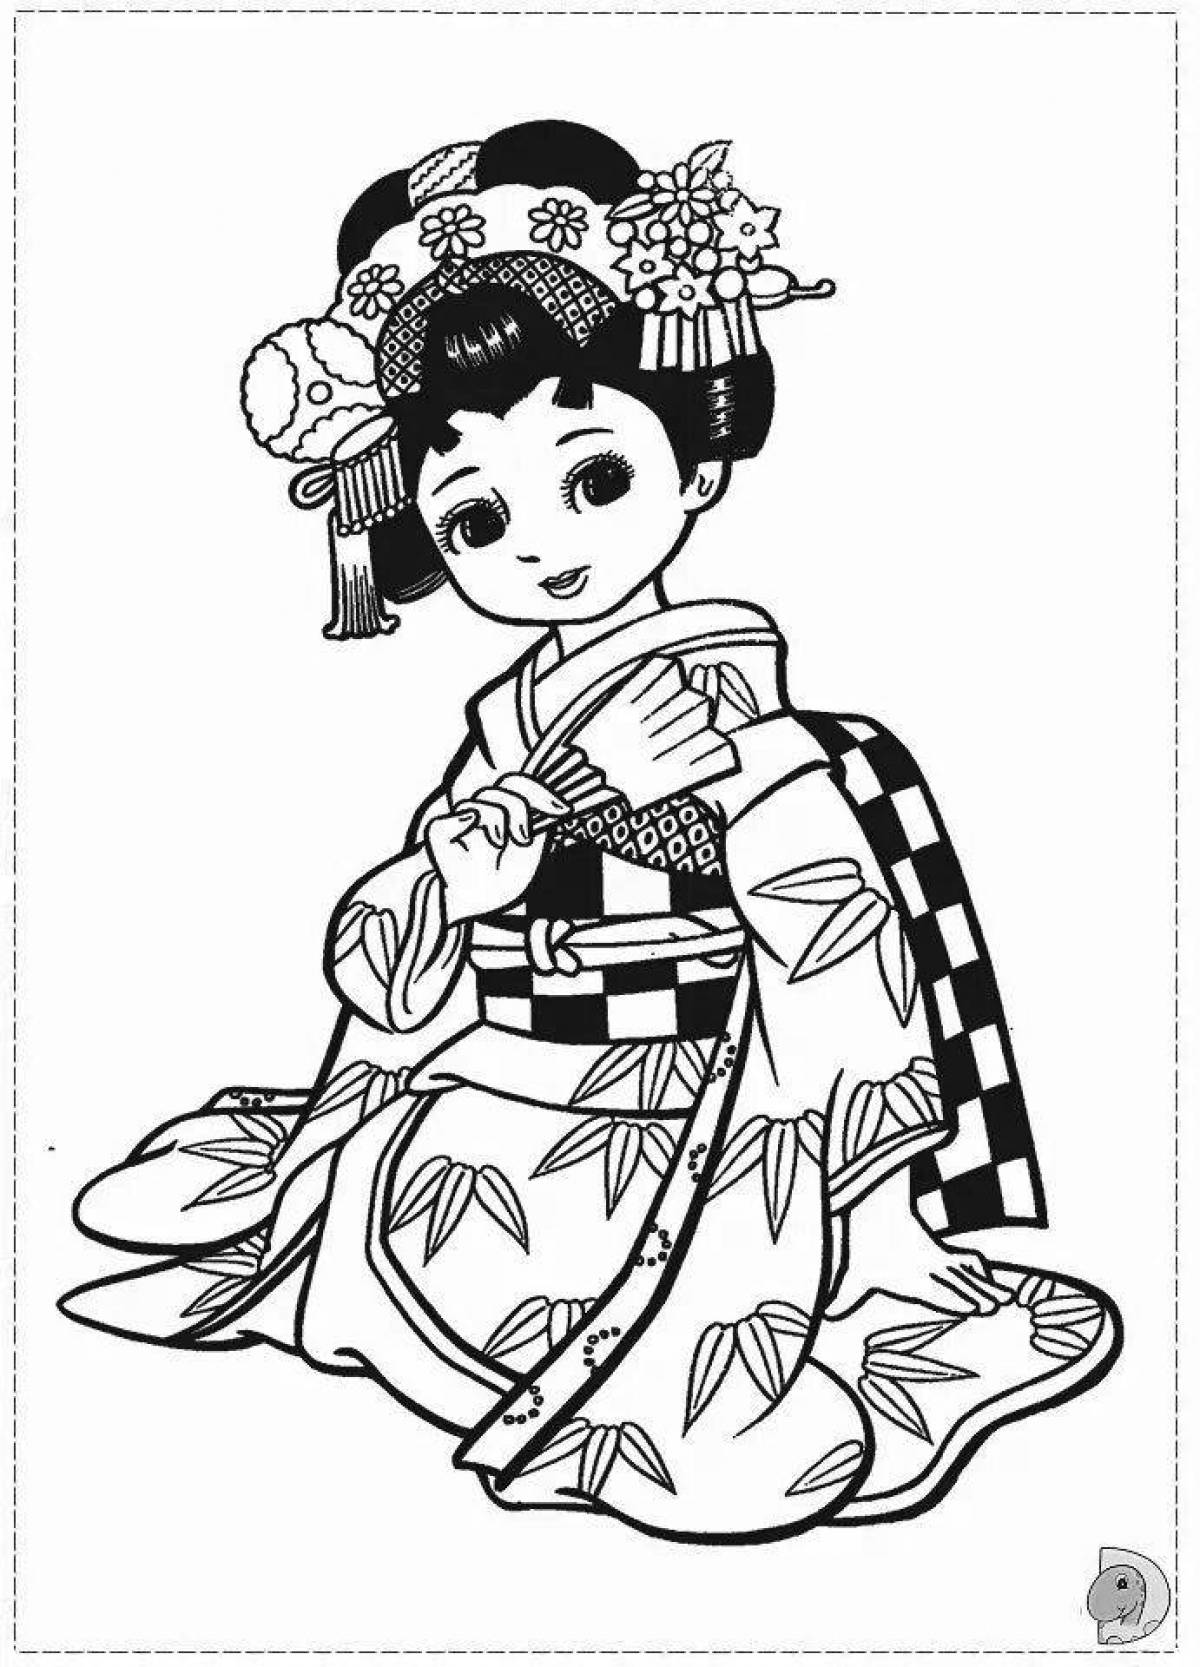 Colorful geisha coloring page